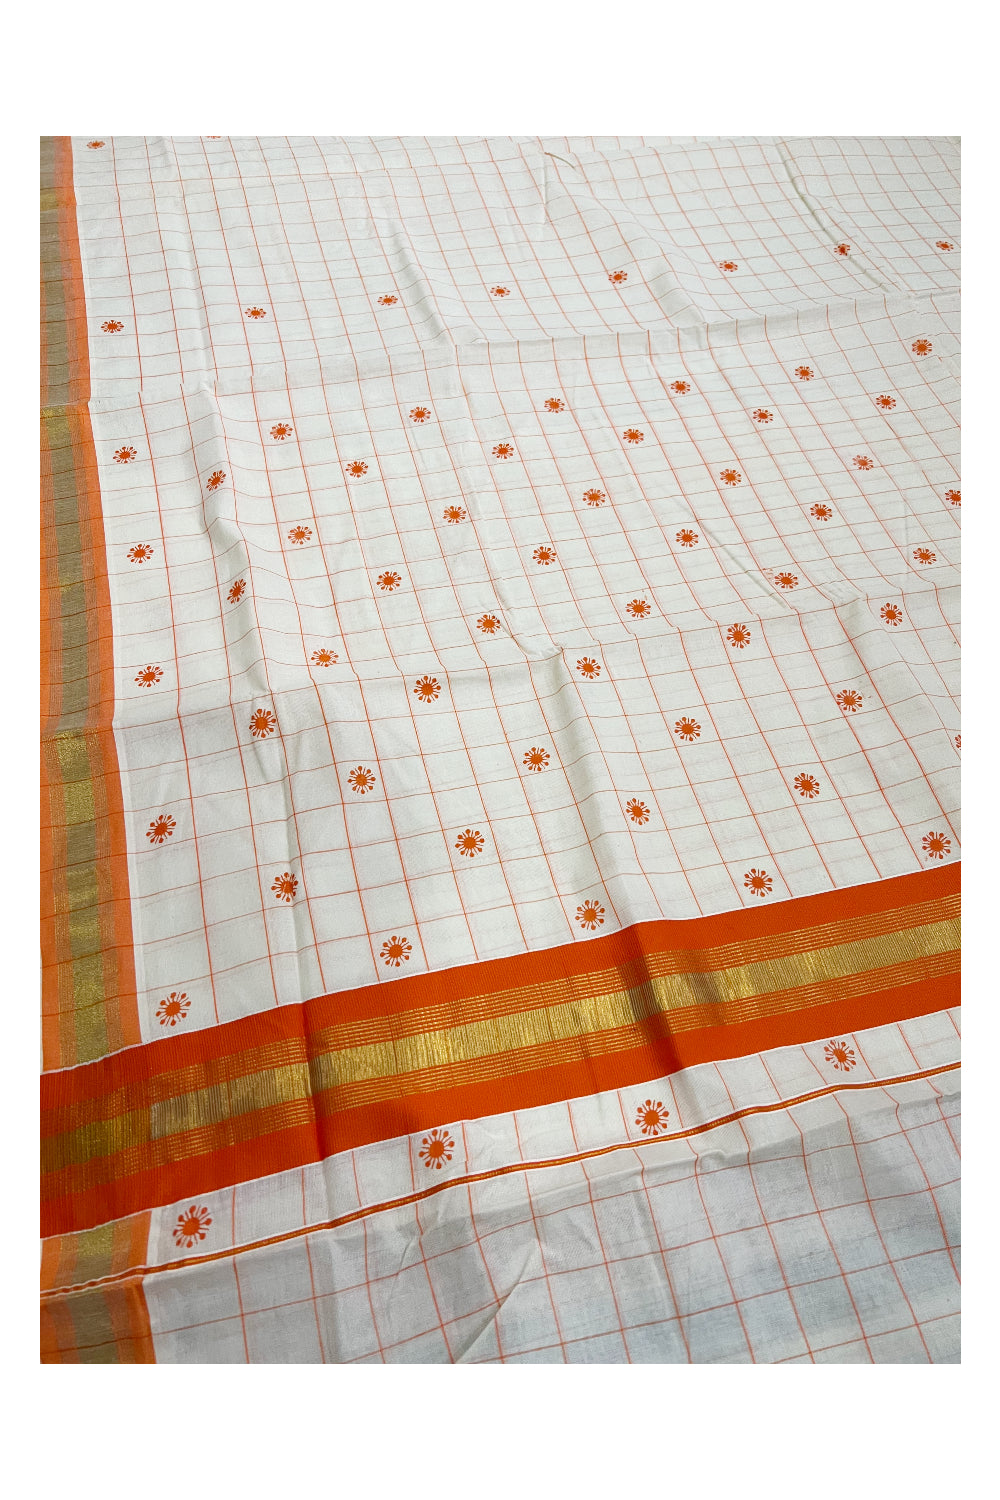 Pure Cotton Kerala Checkered Saree with Orange Block Prints and Kasavu Border